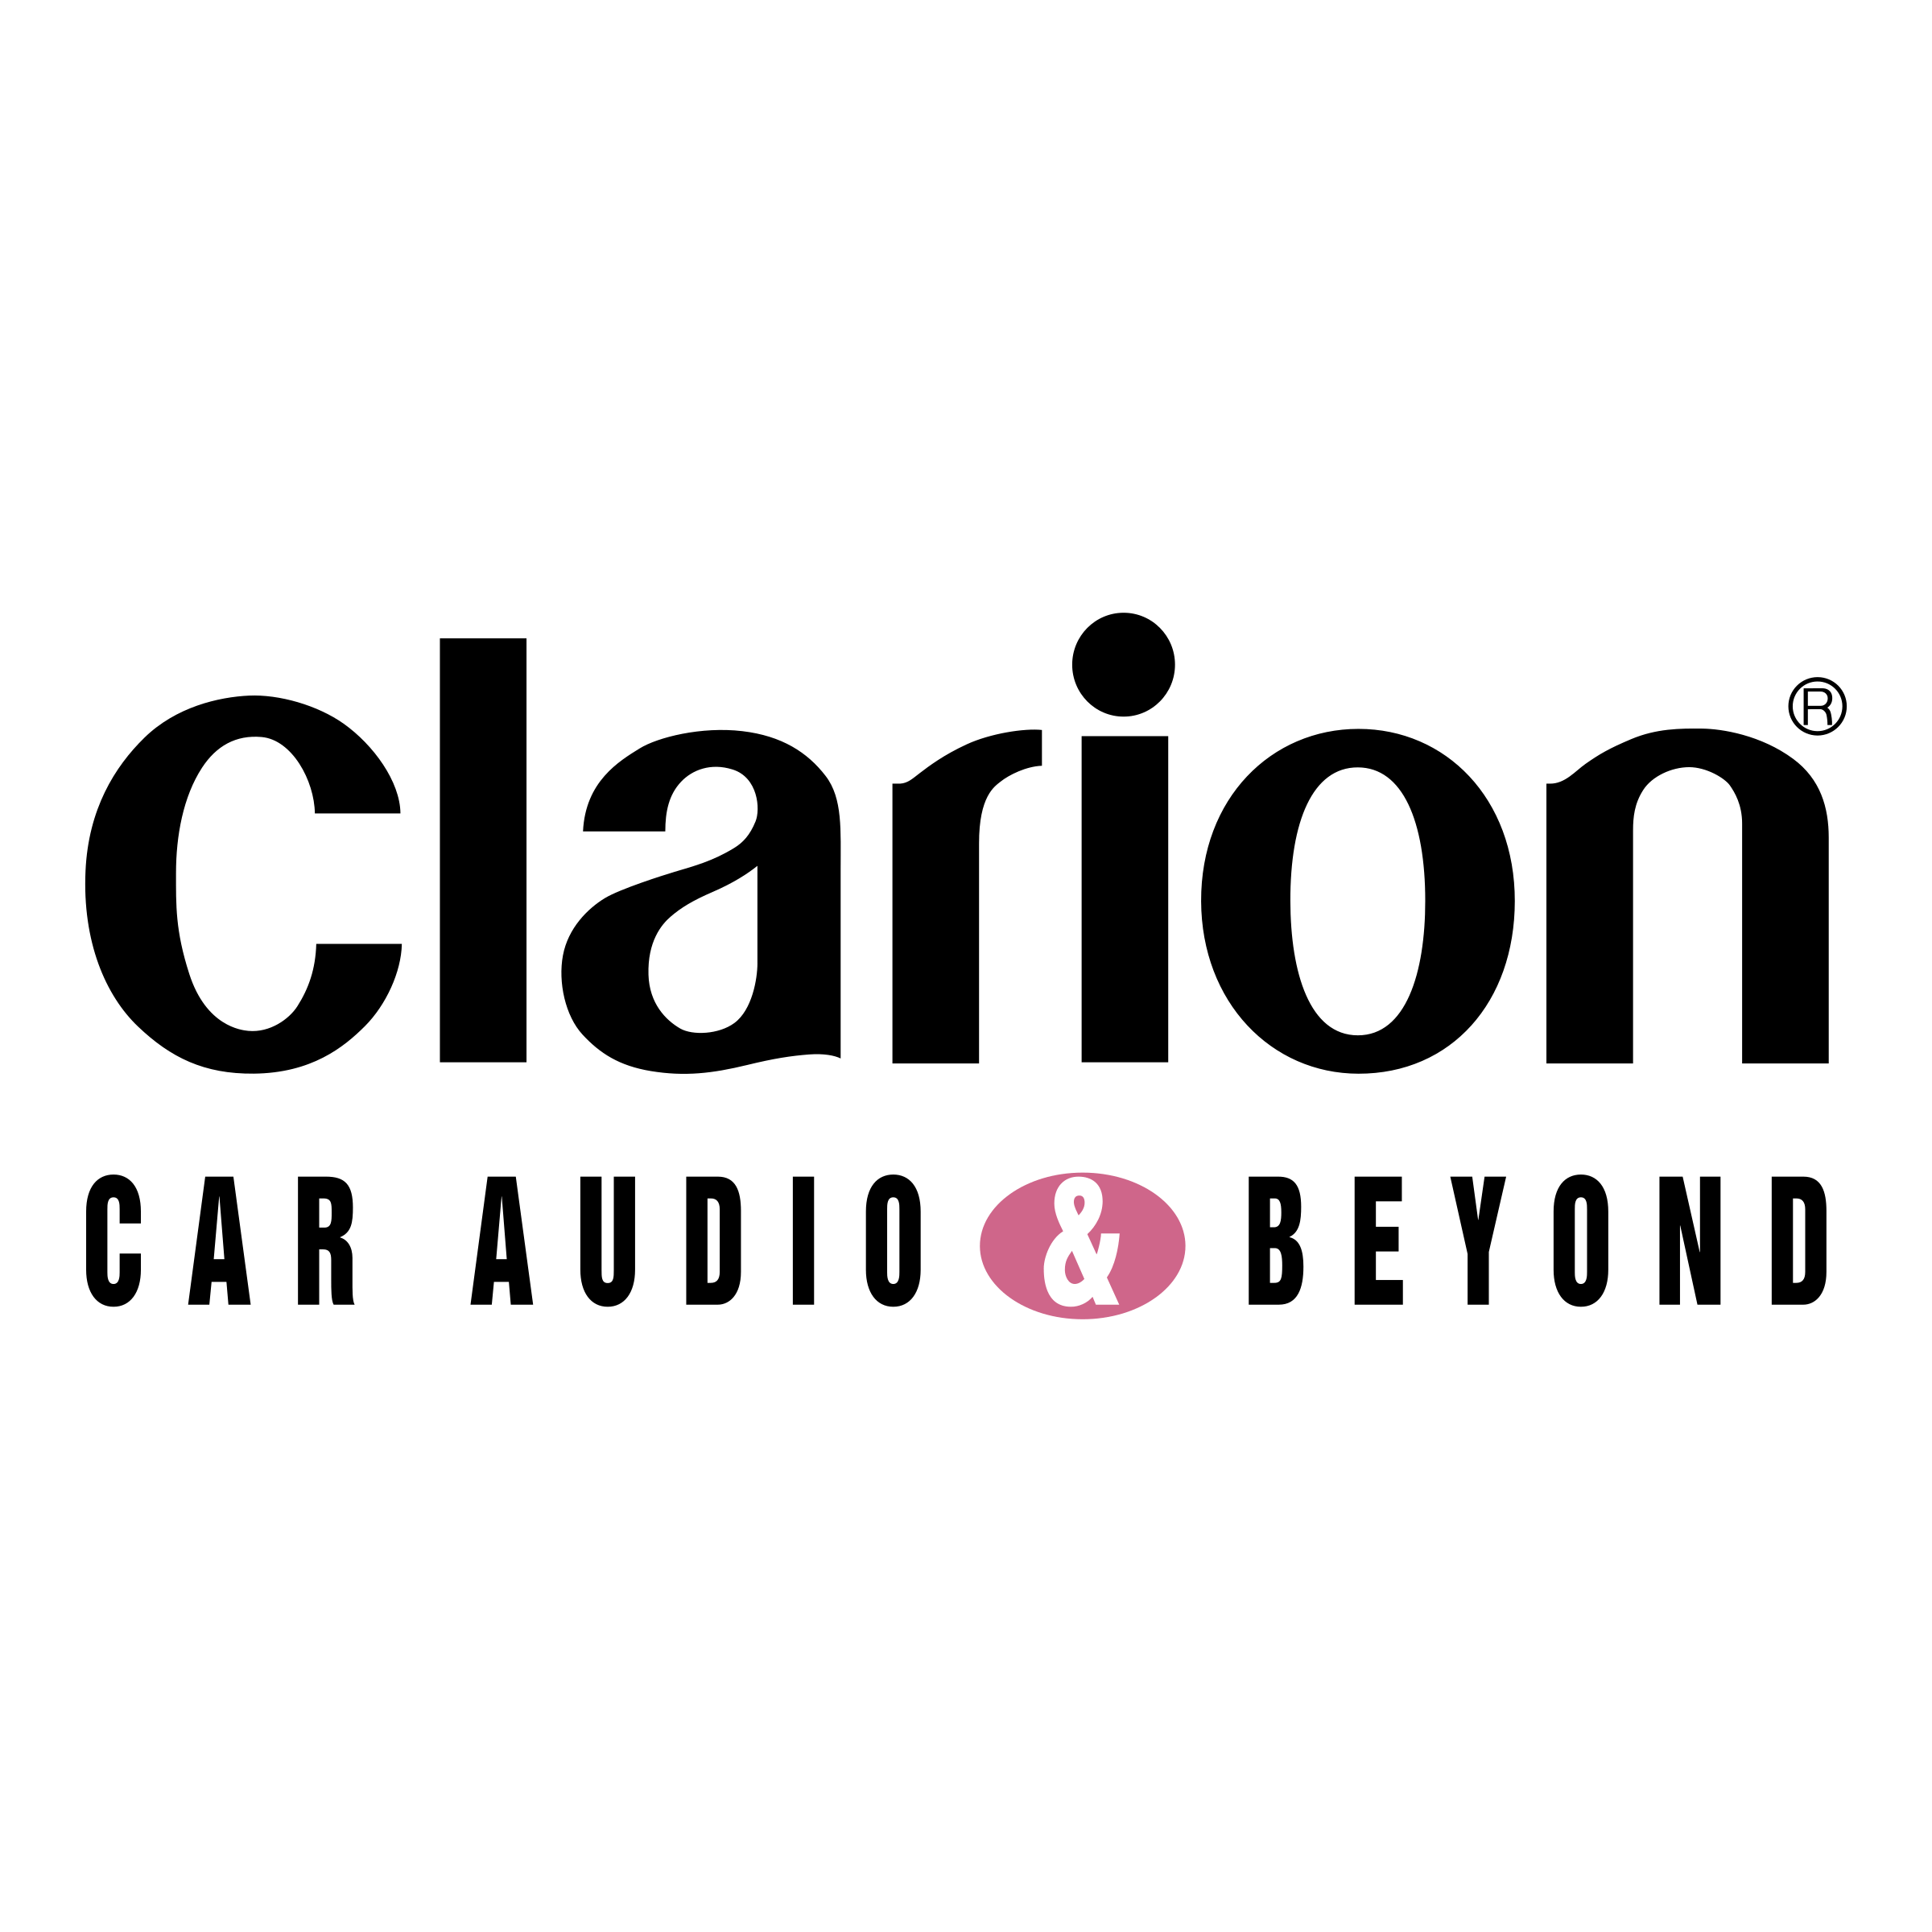 Clarion Logo - Clarion Logo PNG Transparent & SVG Vector - Freebie Supply